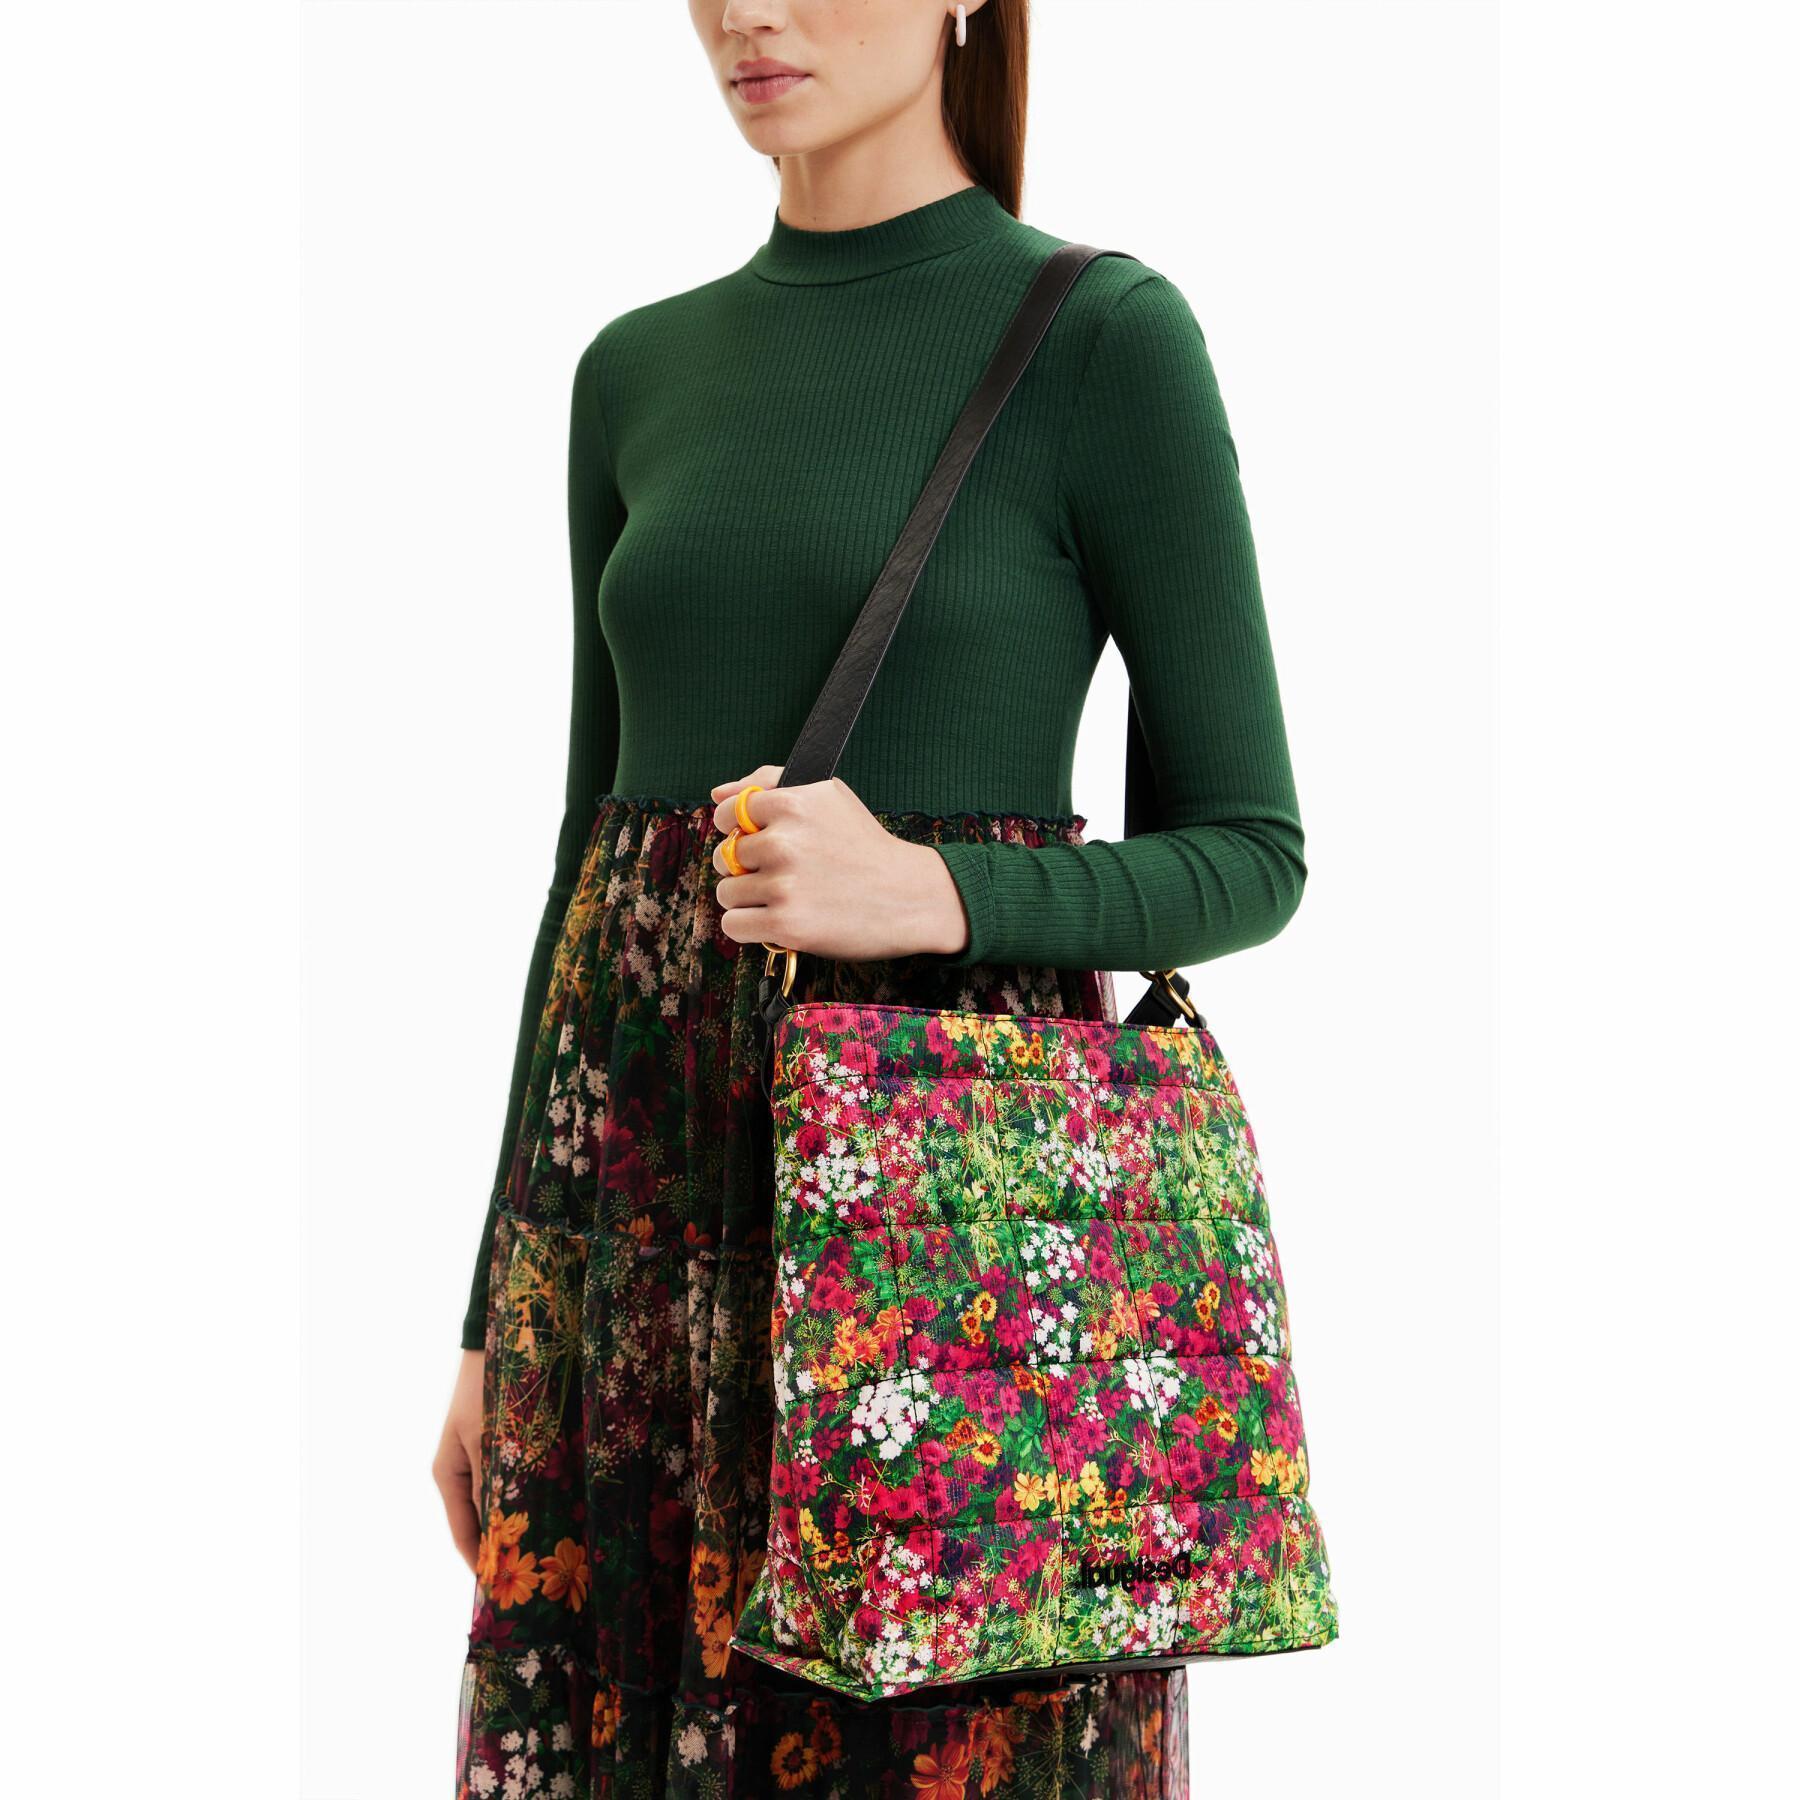 Women's handbag Desigual Ivy Butan